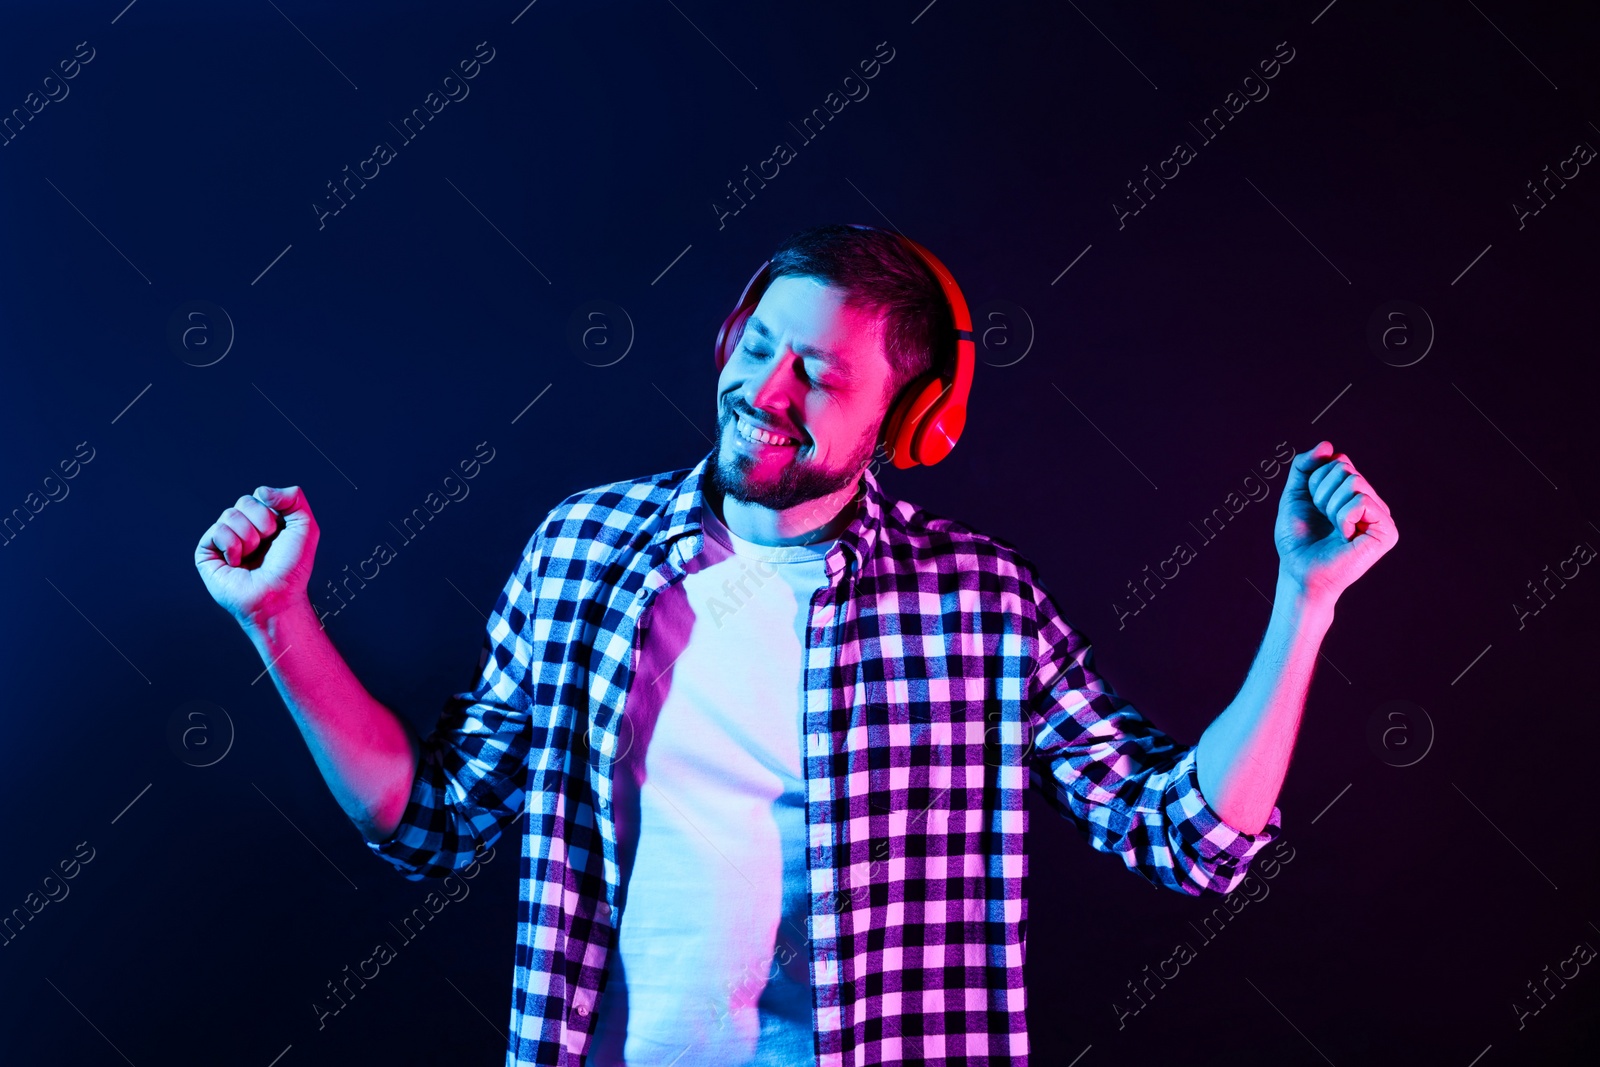 Photo of Happy man in headphones enjoying music in neon lights against dark blue background